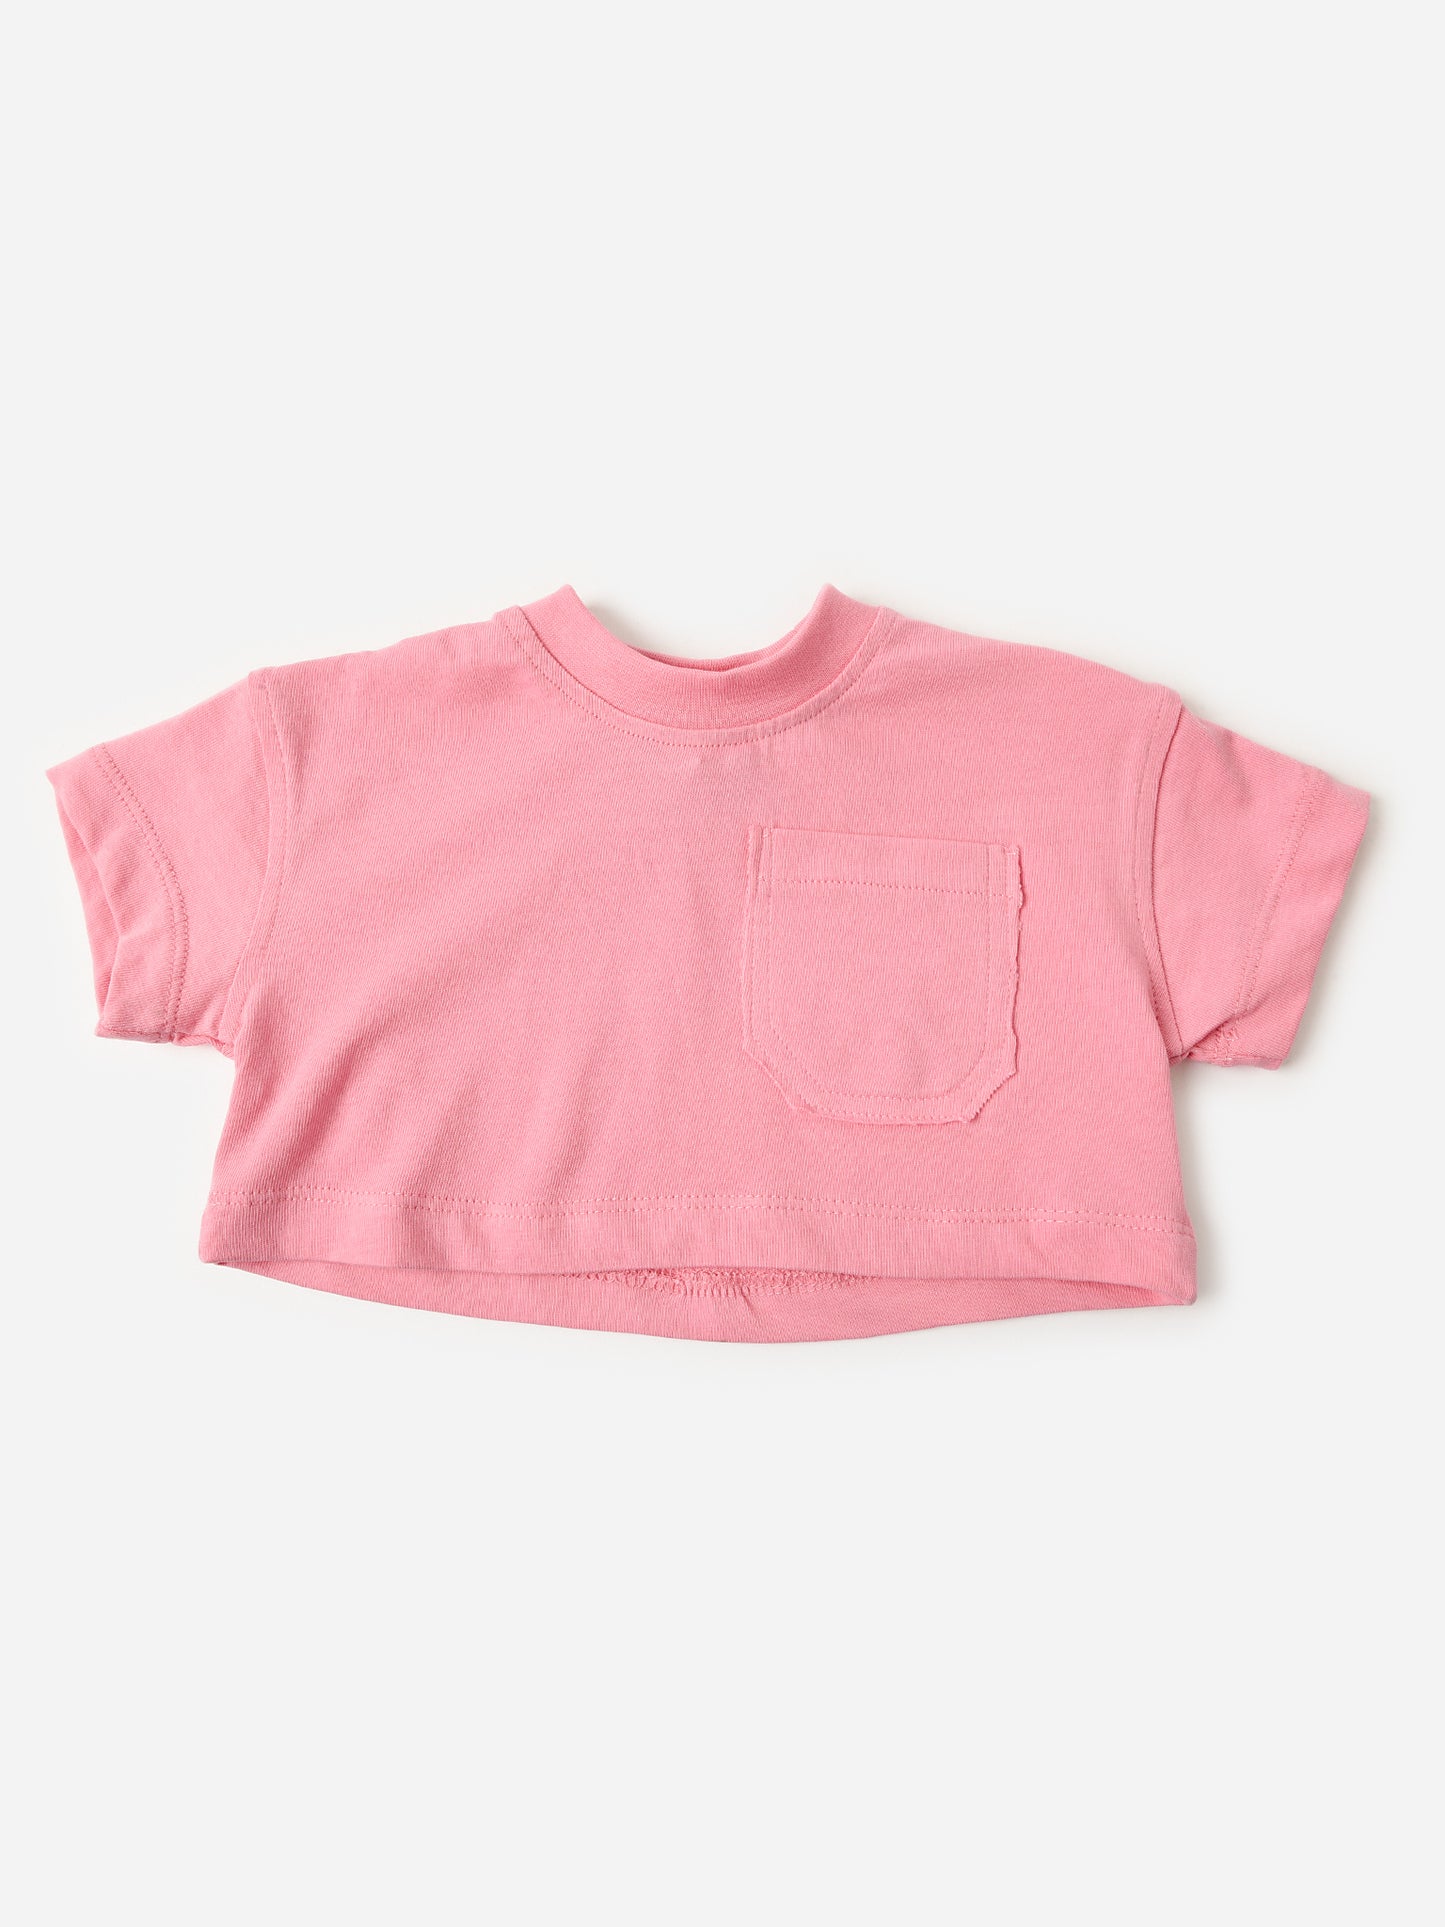 DL1961 Toddler Girls' Short Sleeve Tee